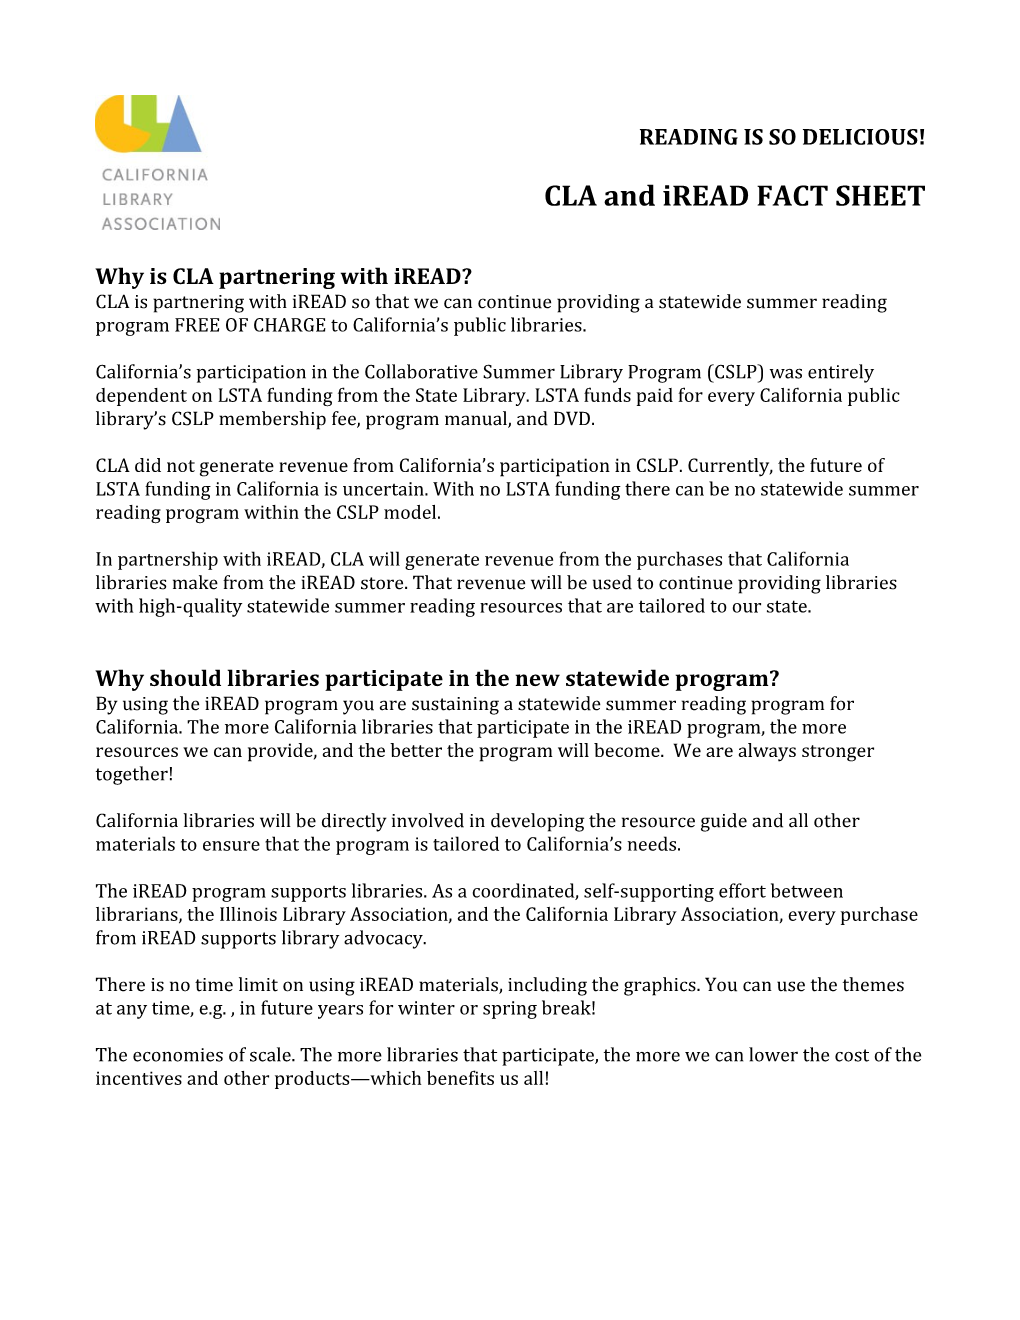 CLA and Ireadfact SHEET